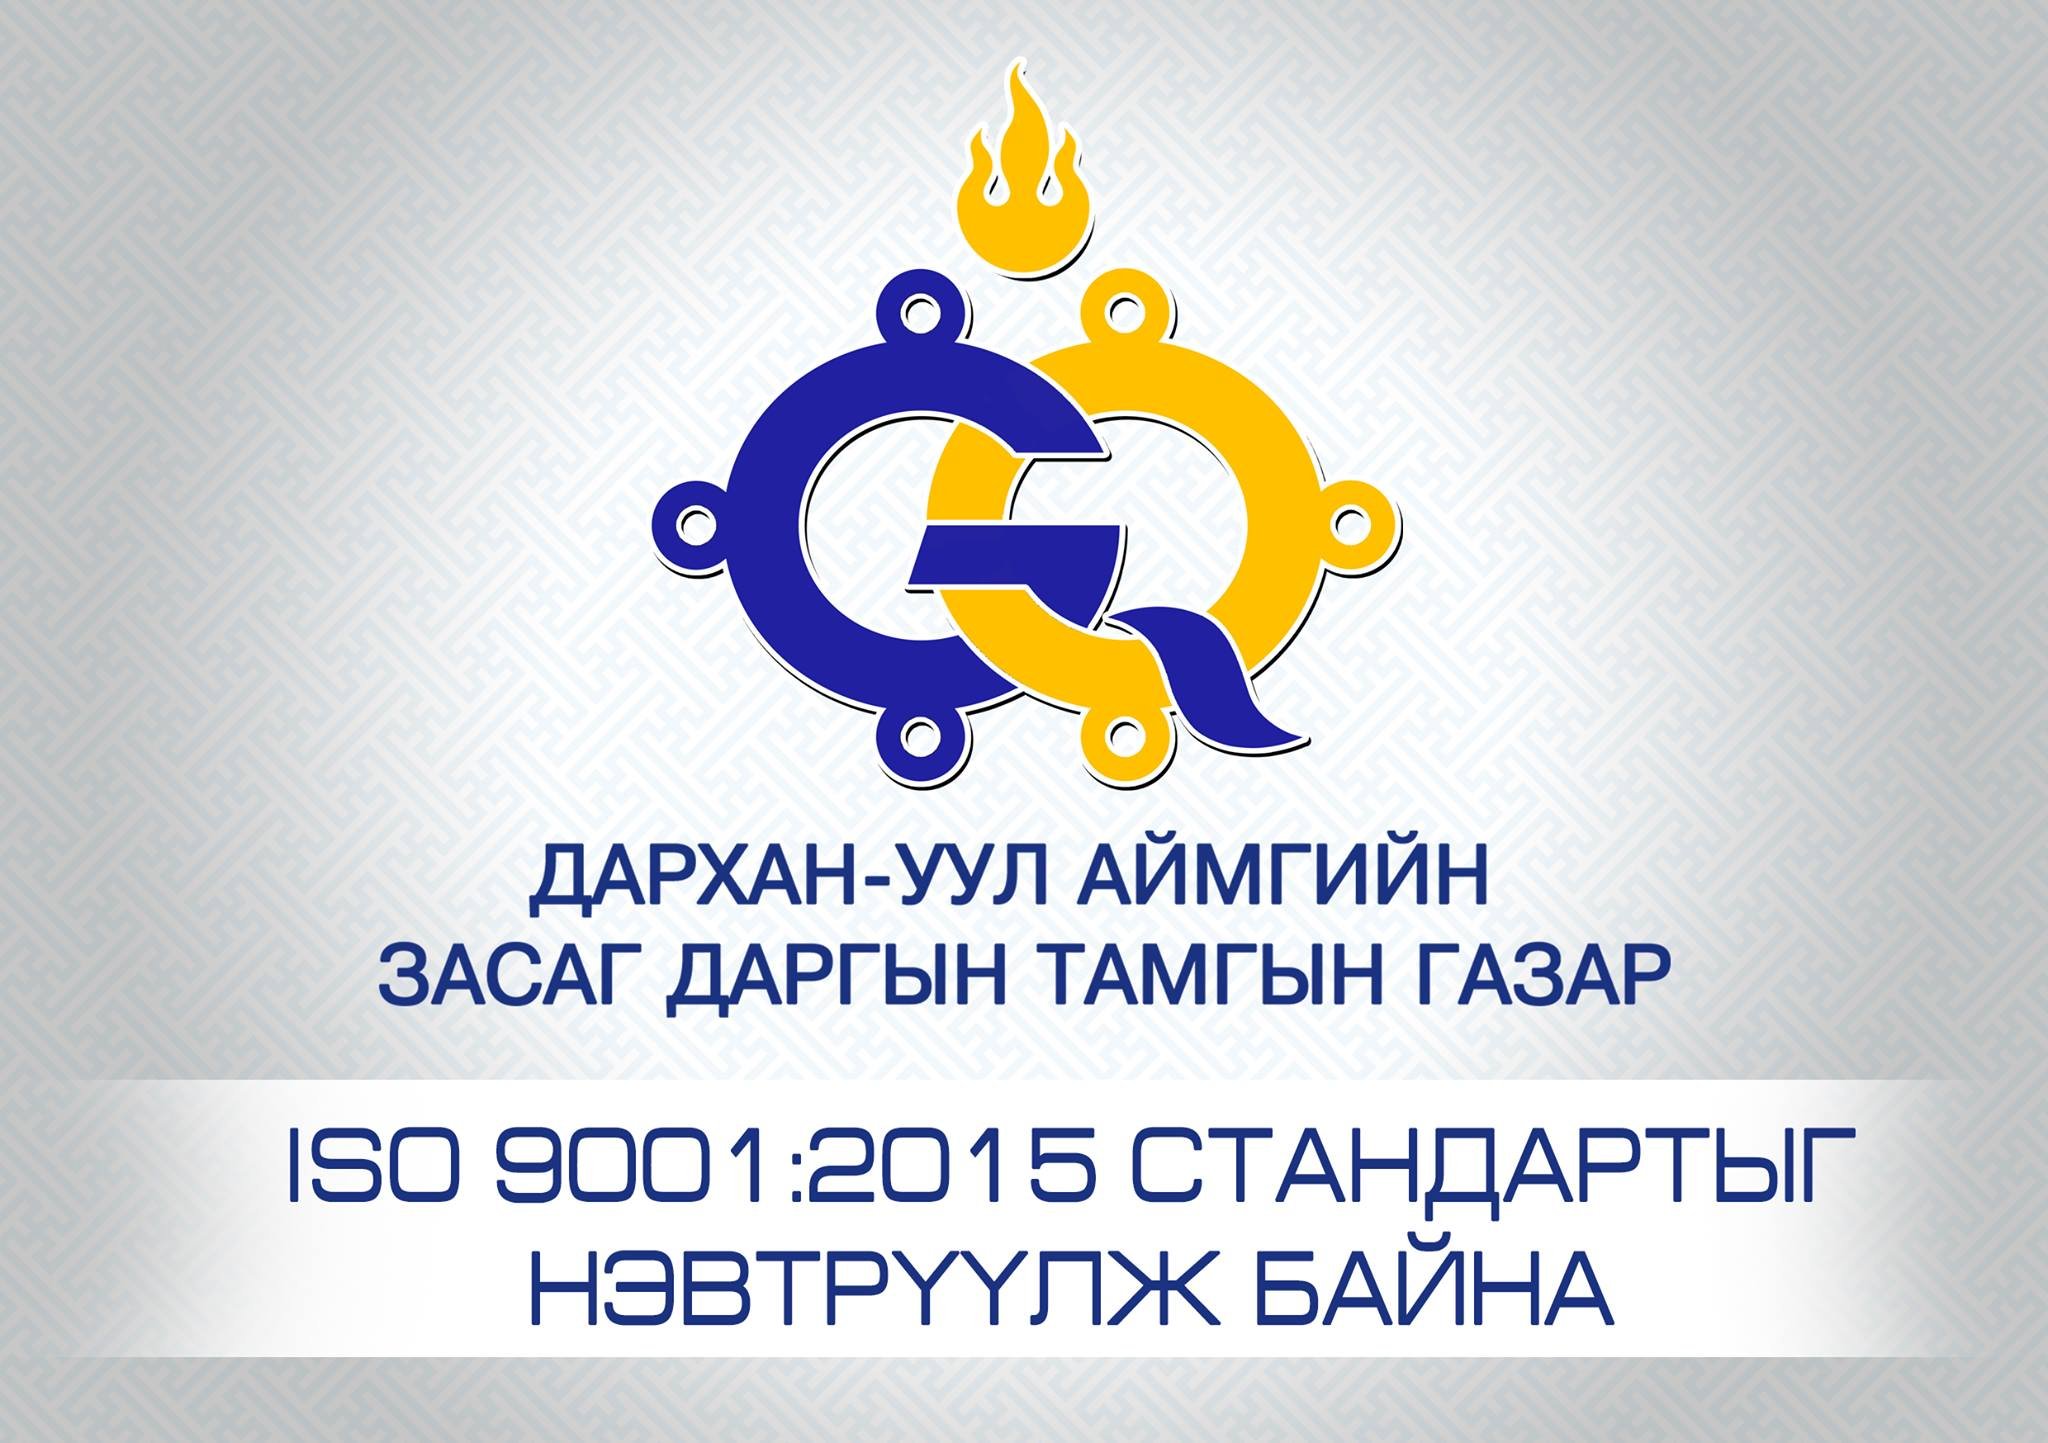 ISO 9001:2015 СТАНДАРТЫГ ҮНДЭСНИЙ СТАНДАРТ БОЛГОЖ БАТАЛЛАА